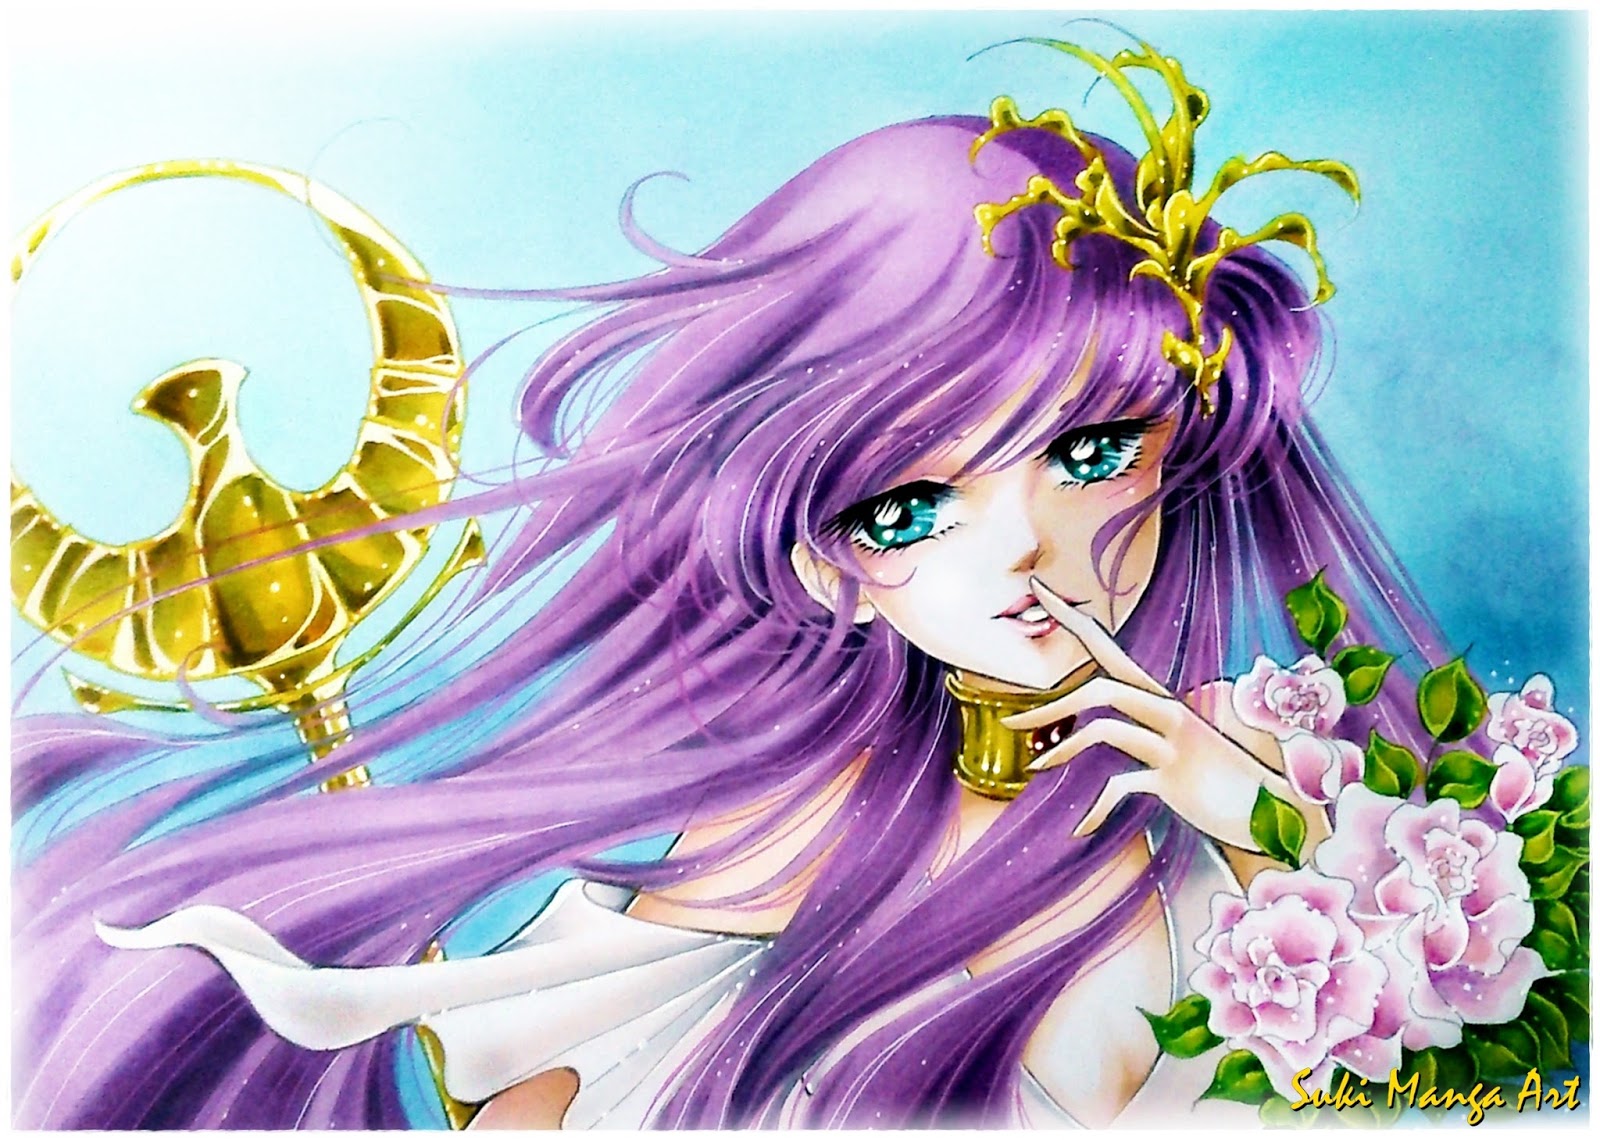 Athena: Saint Seiya